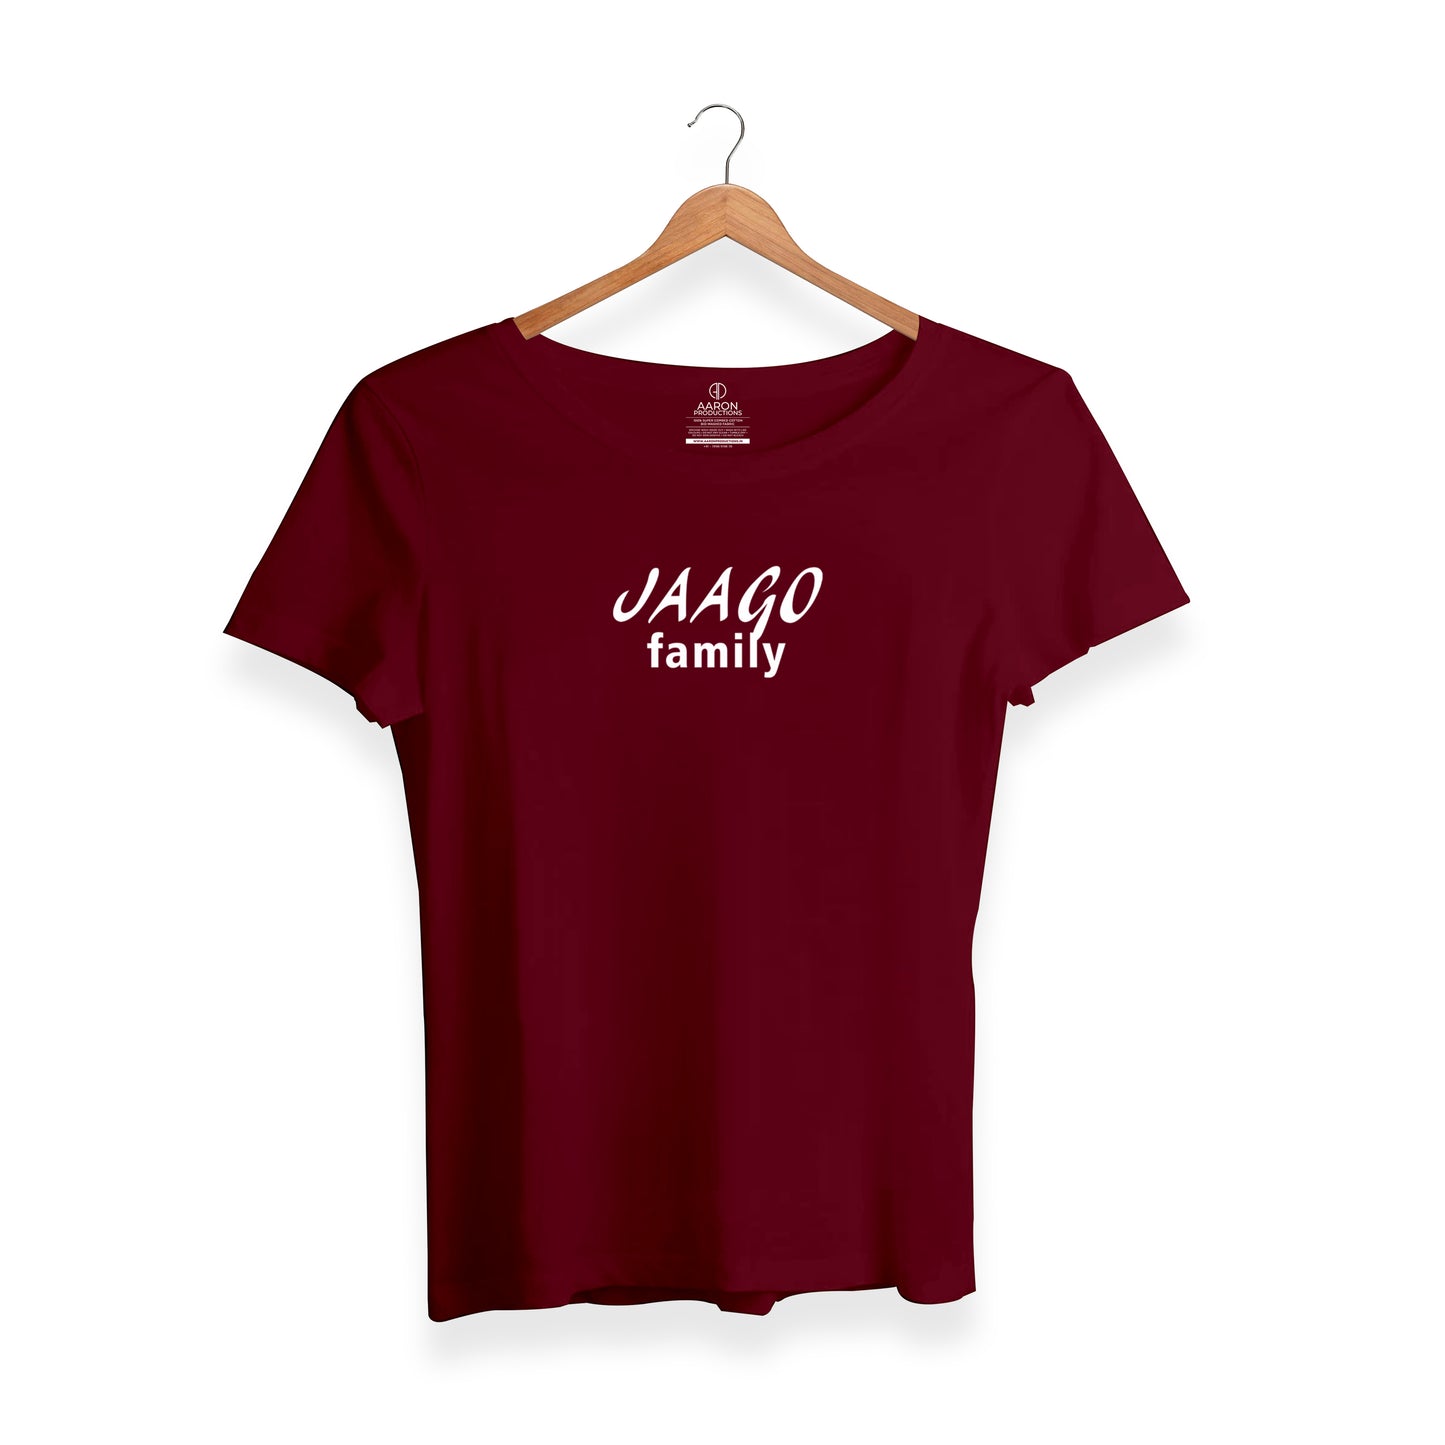 02 Jaago Family - Women tshirt